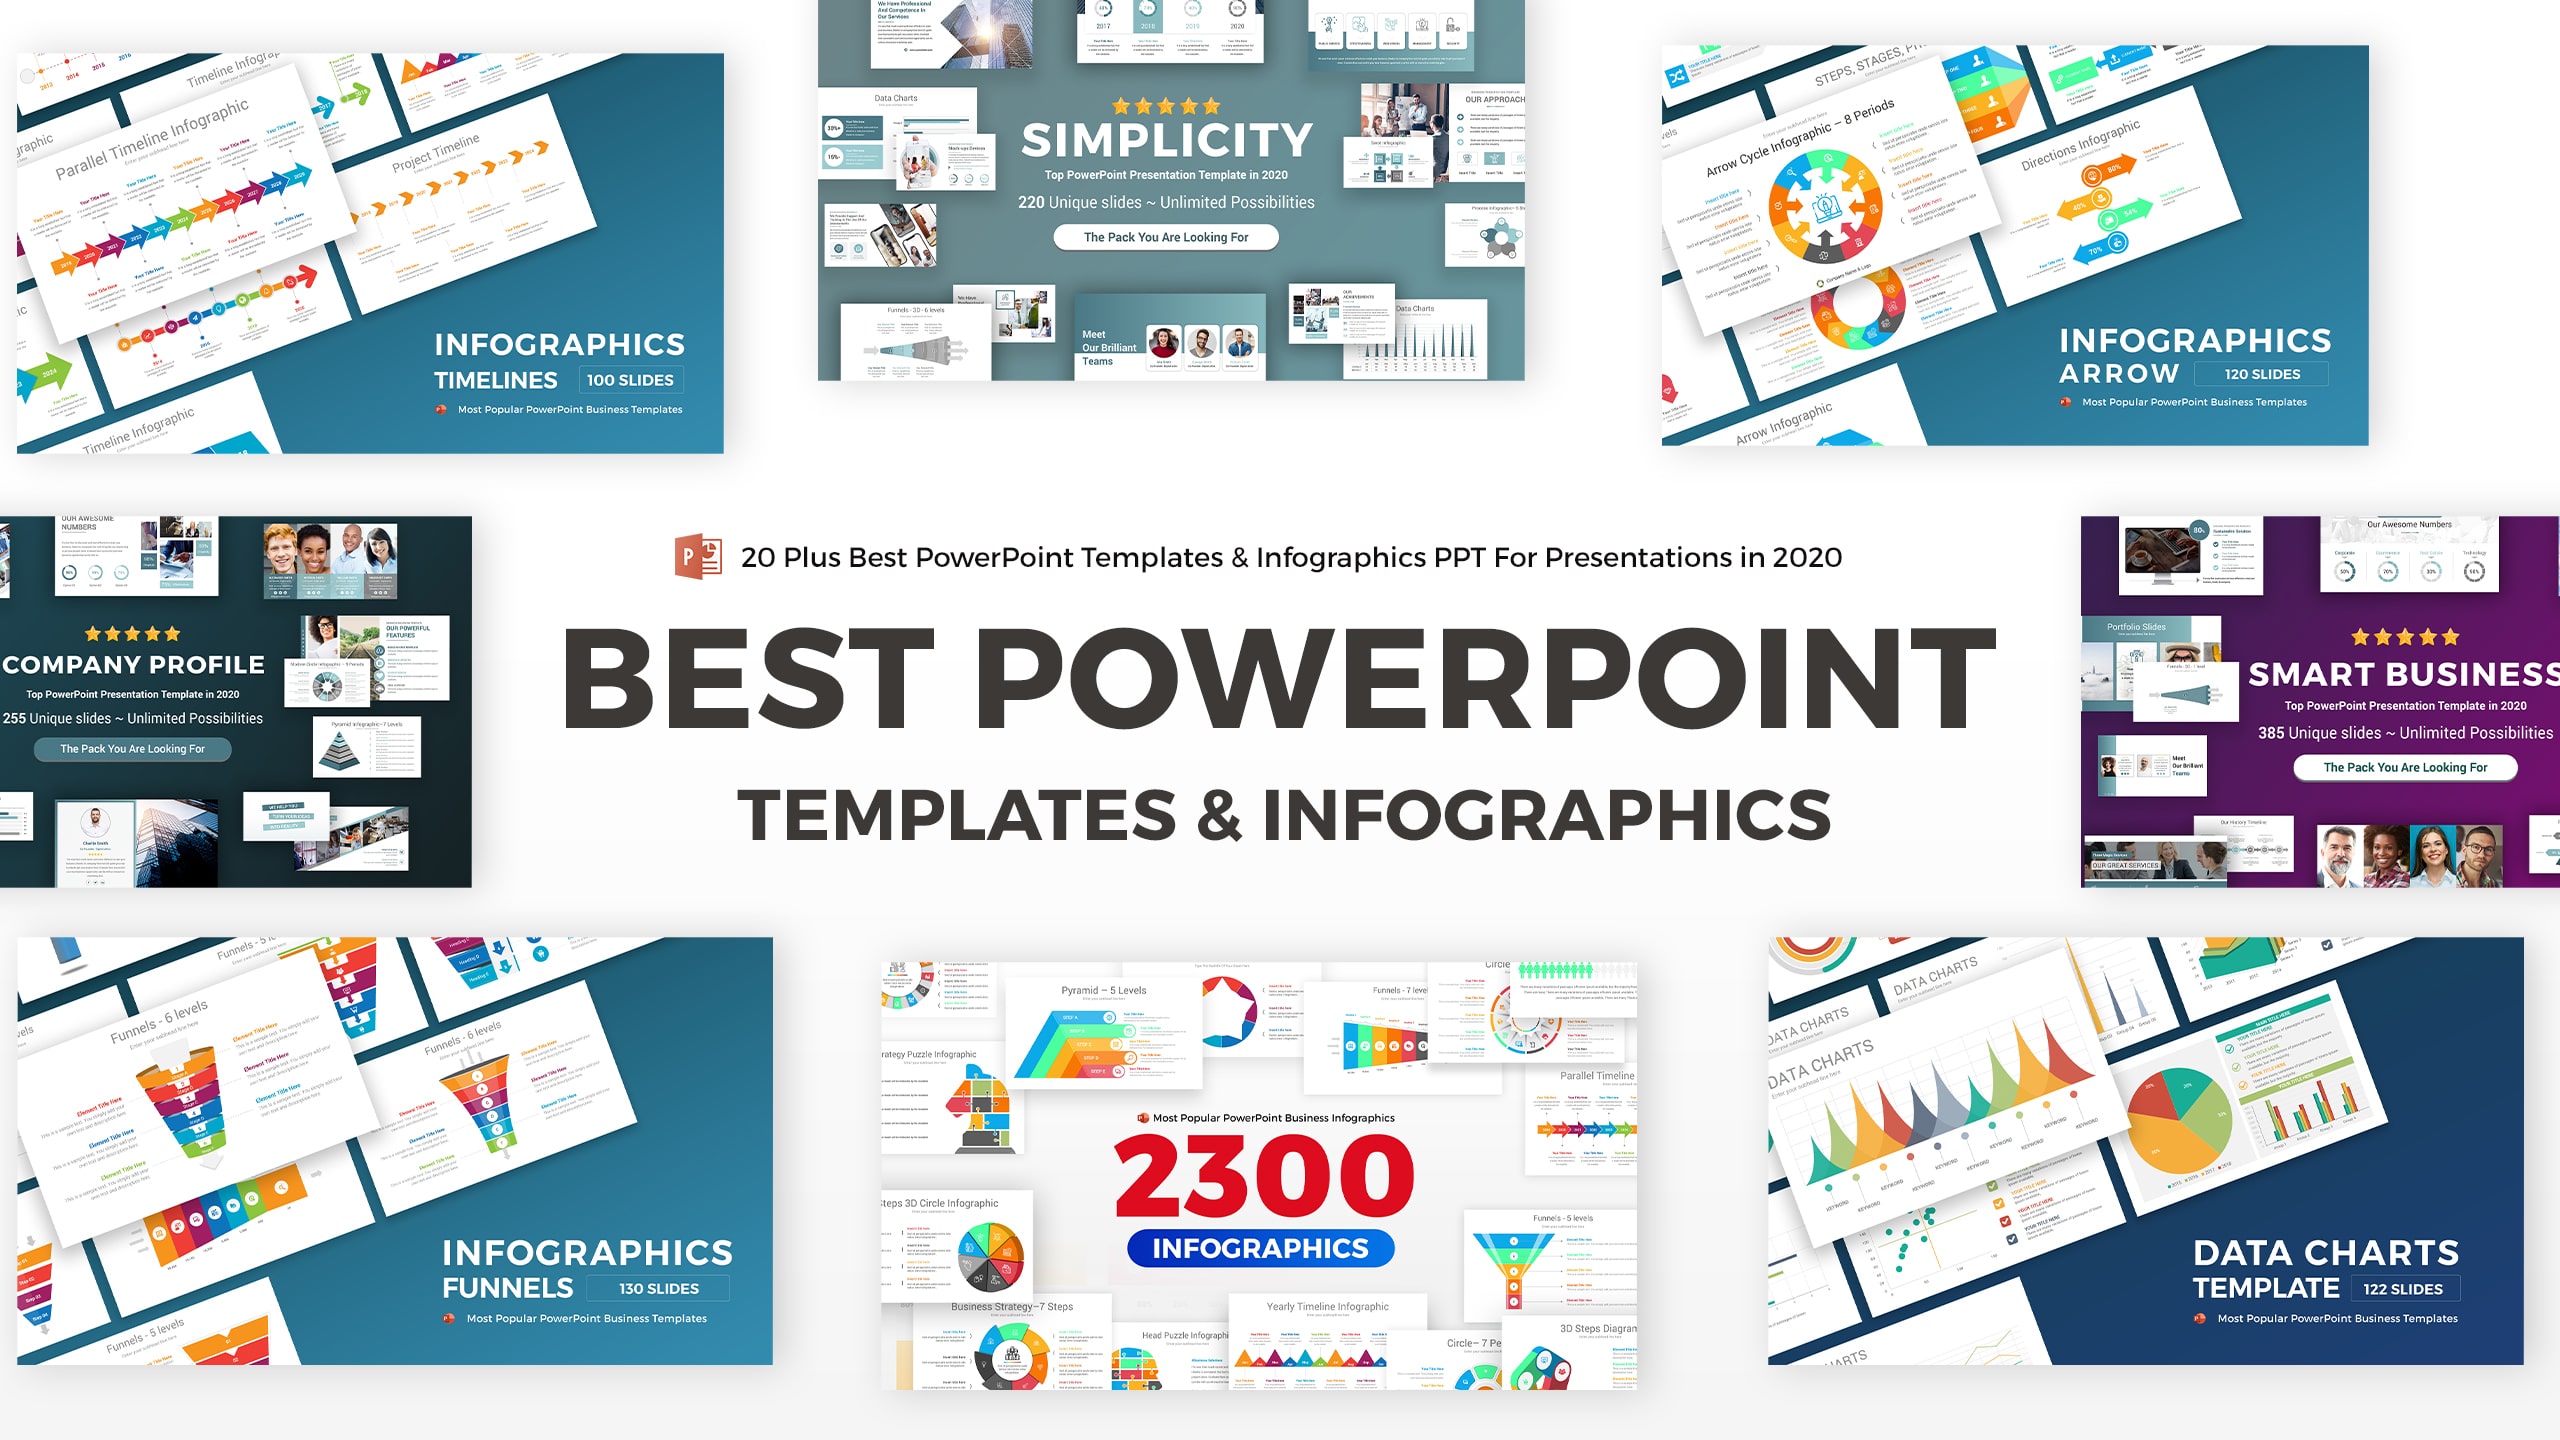 powerpoint infographic design